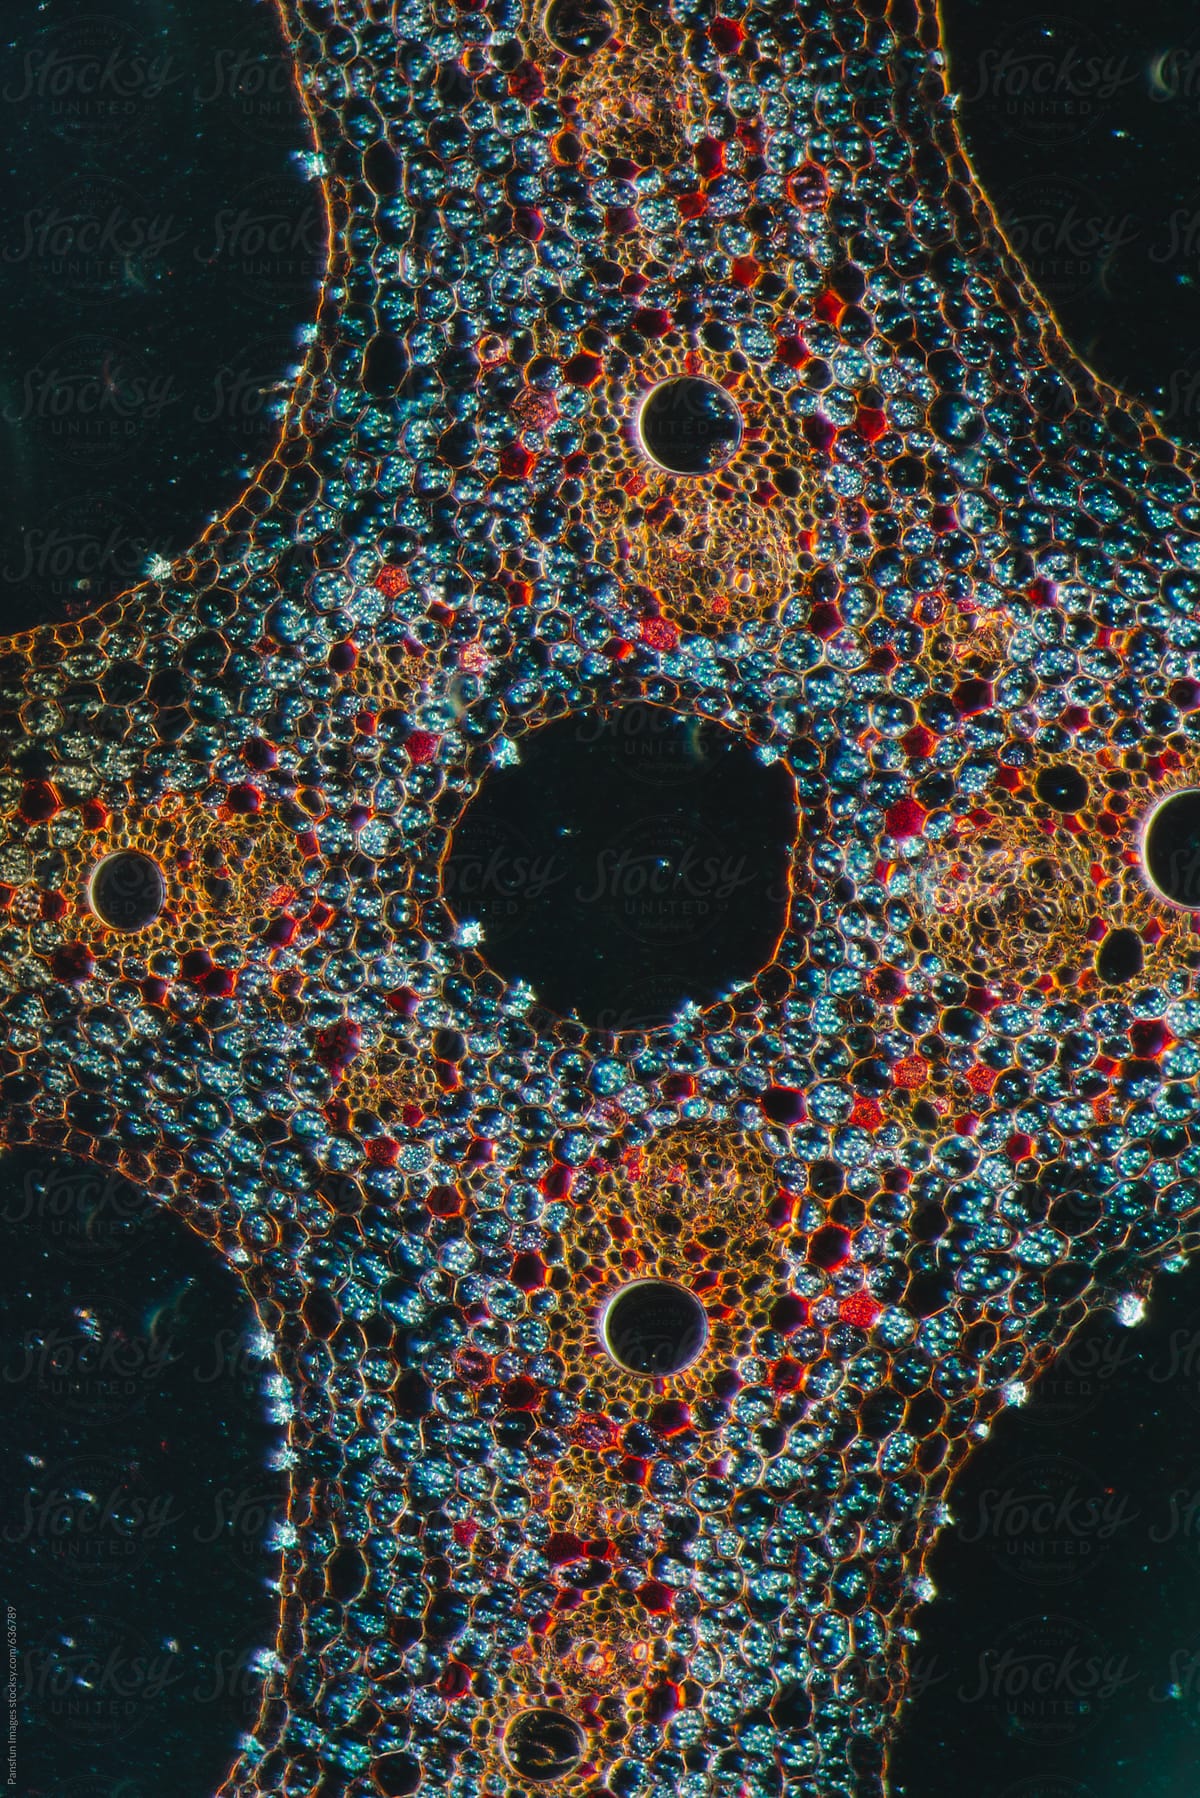 plant cells micrograph